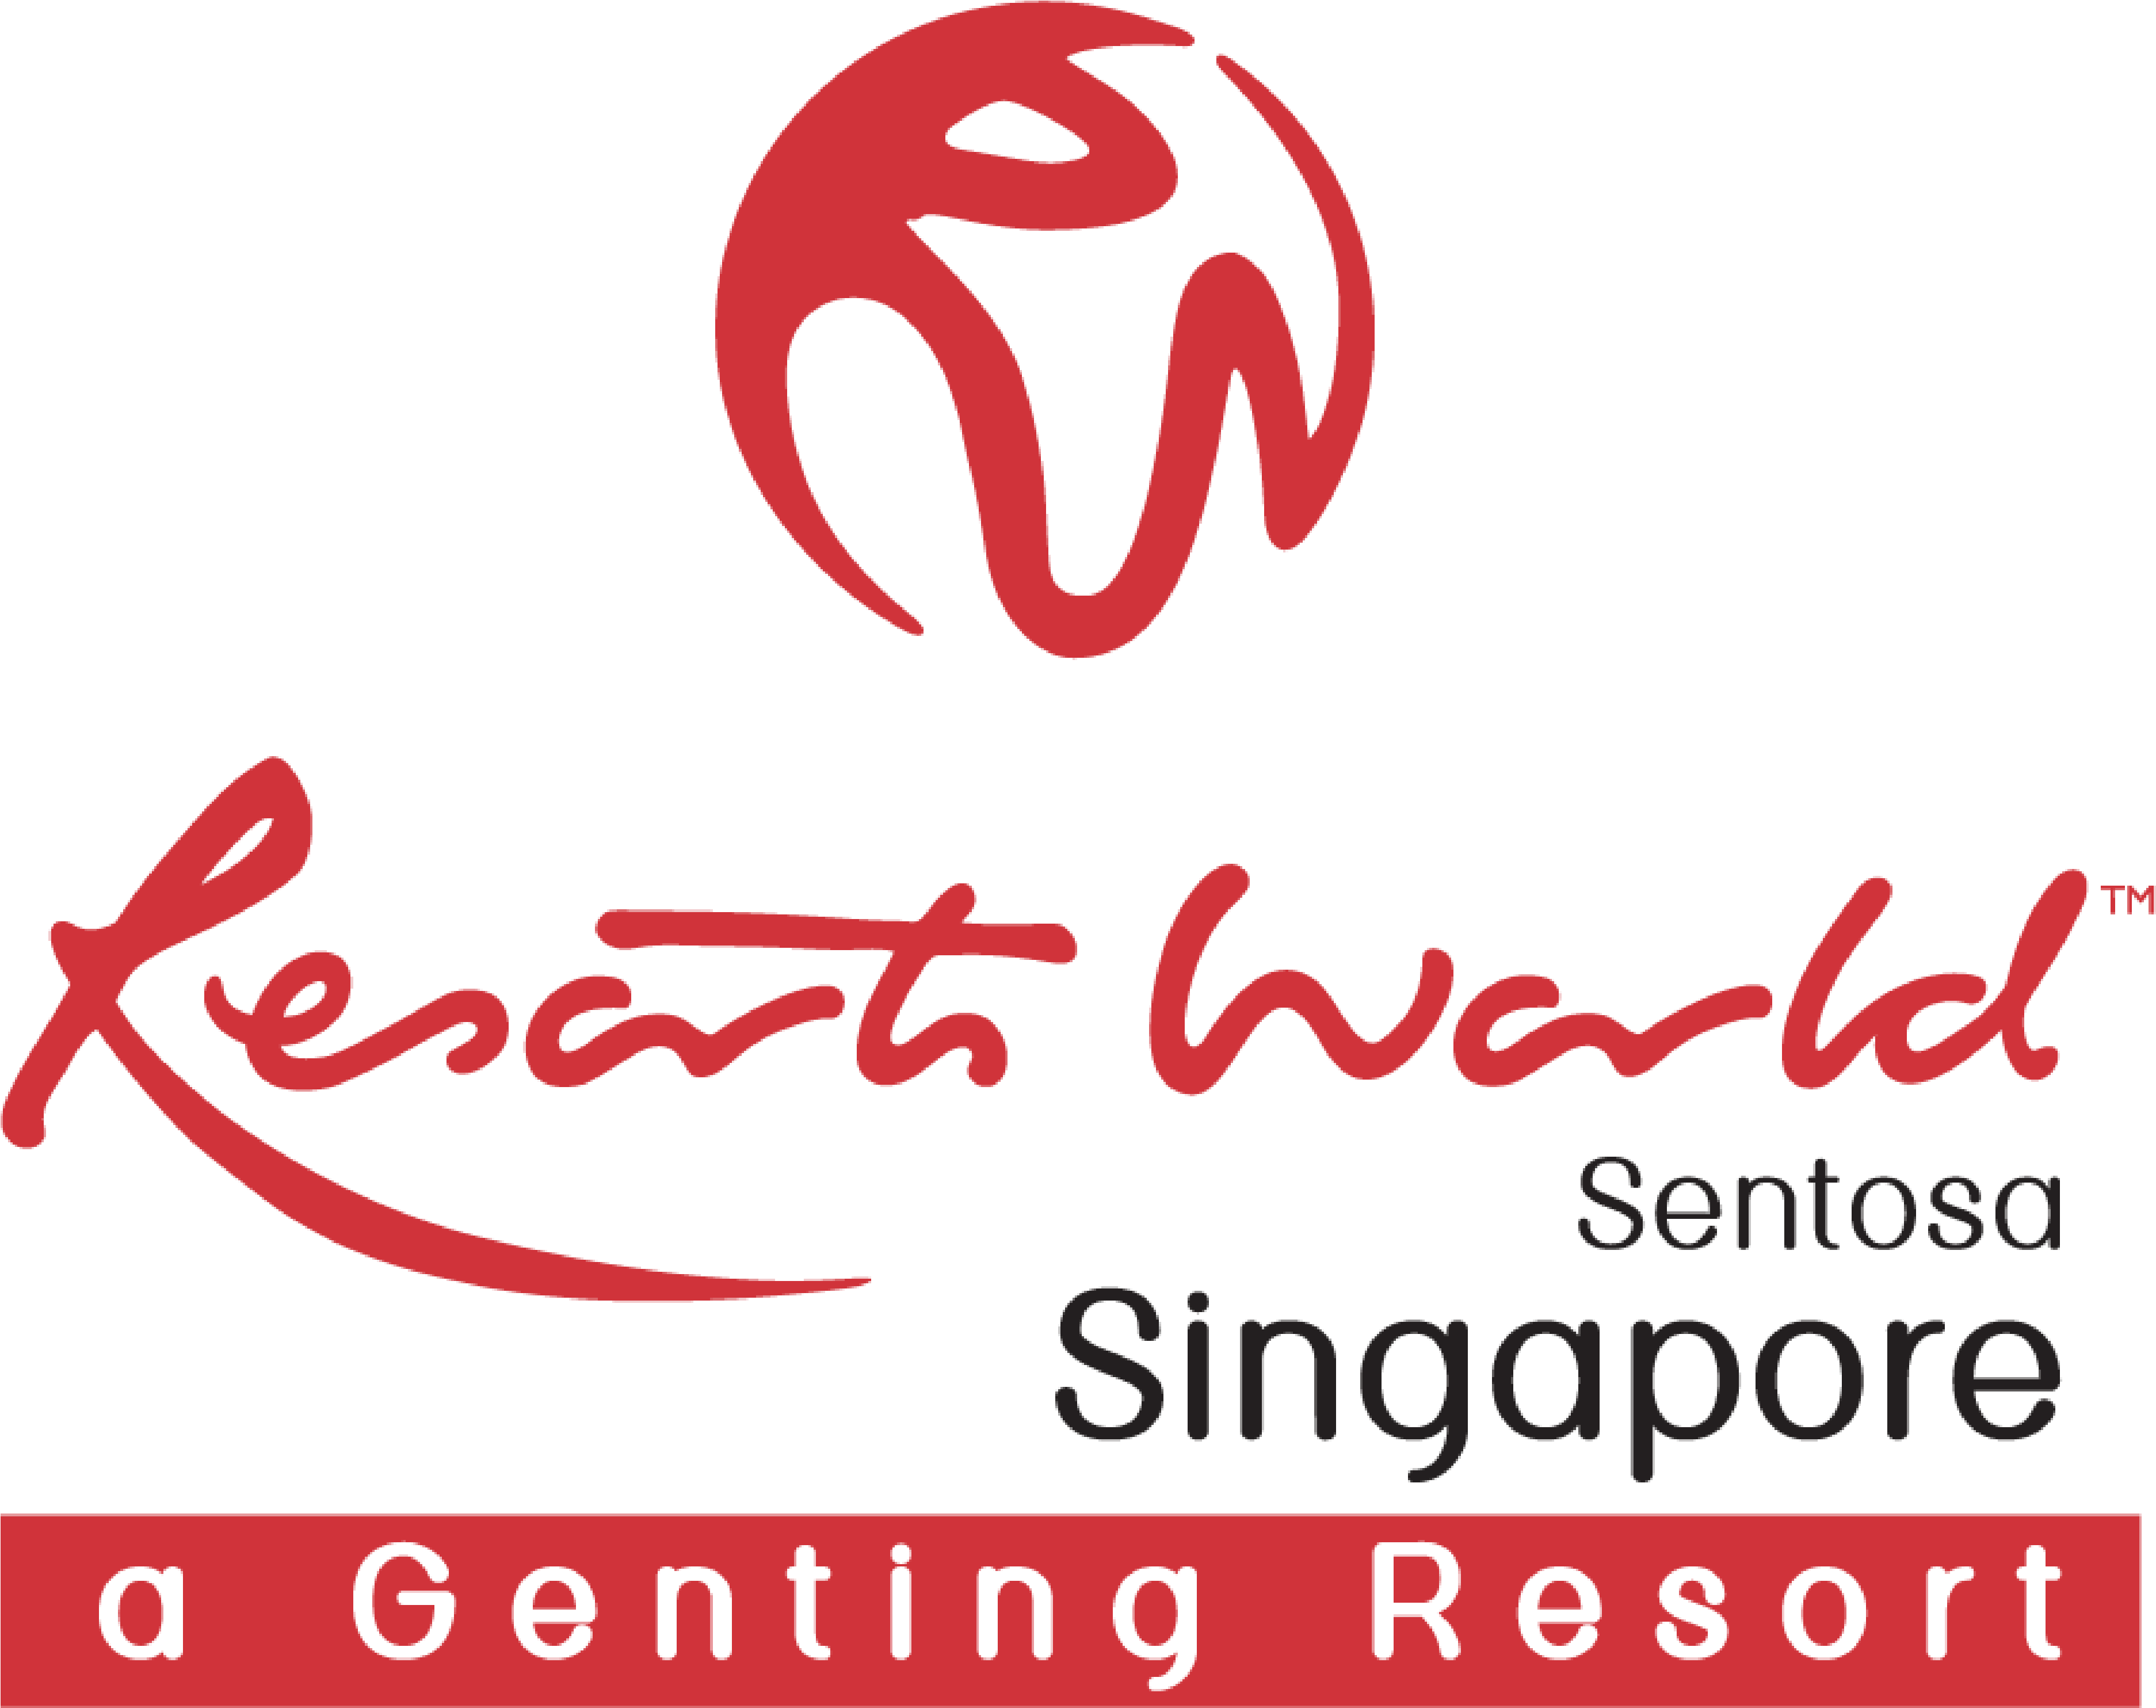 Download Open Menu Resort World Sentosa Logo Png Image With No Background Pngkey Com